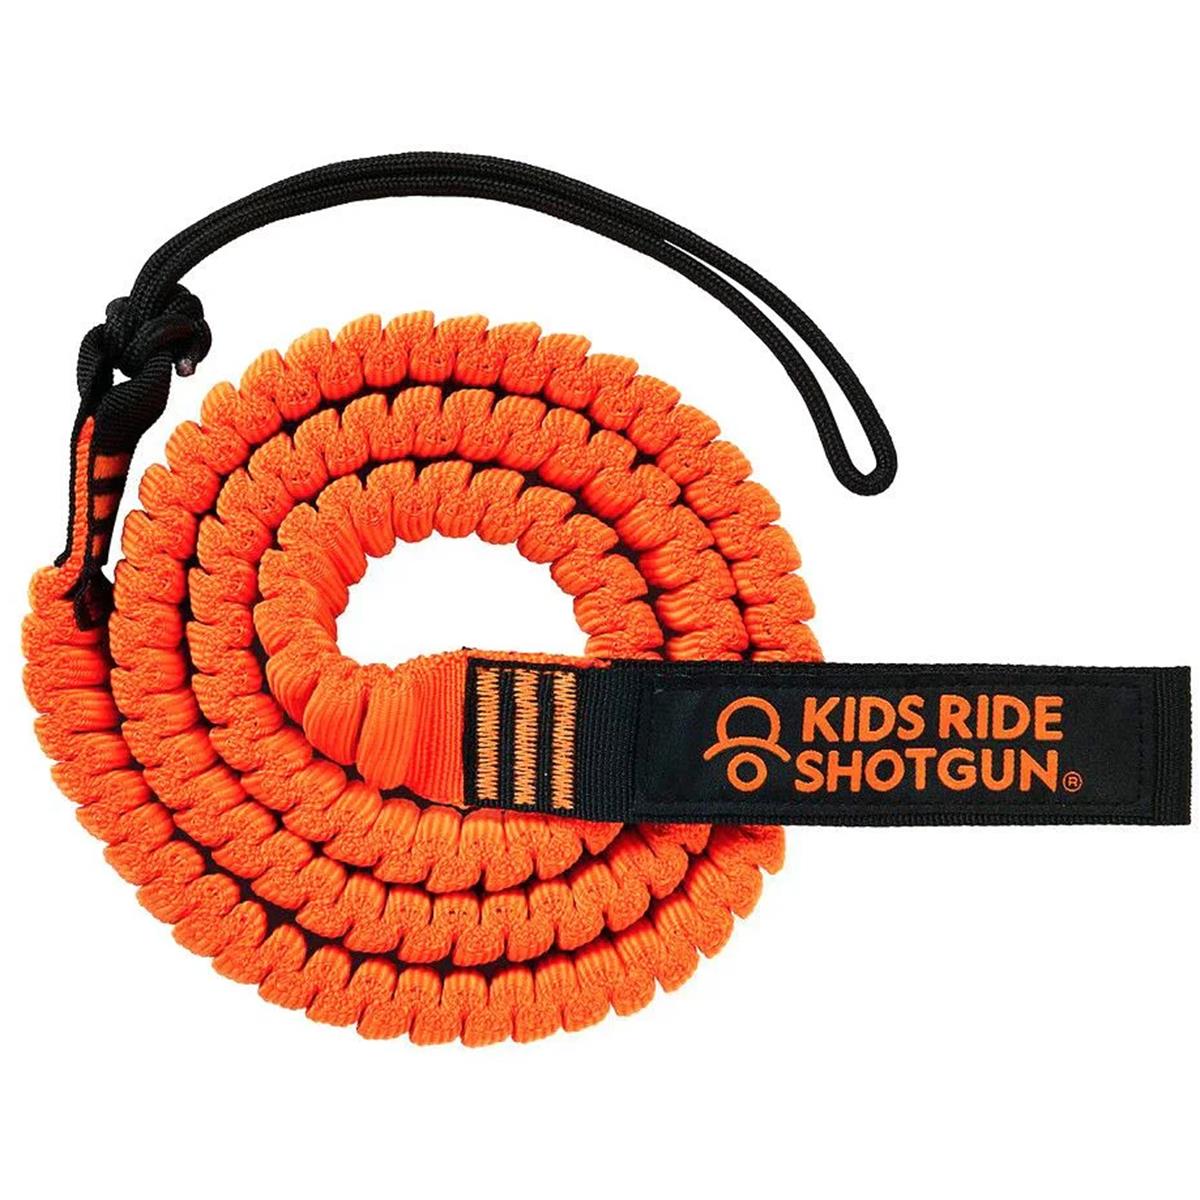 Shotgun Traino Bungee Tow Rope Arancione